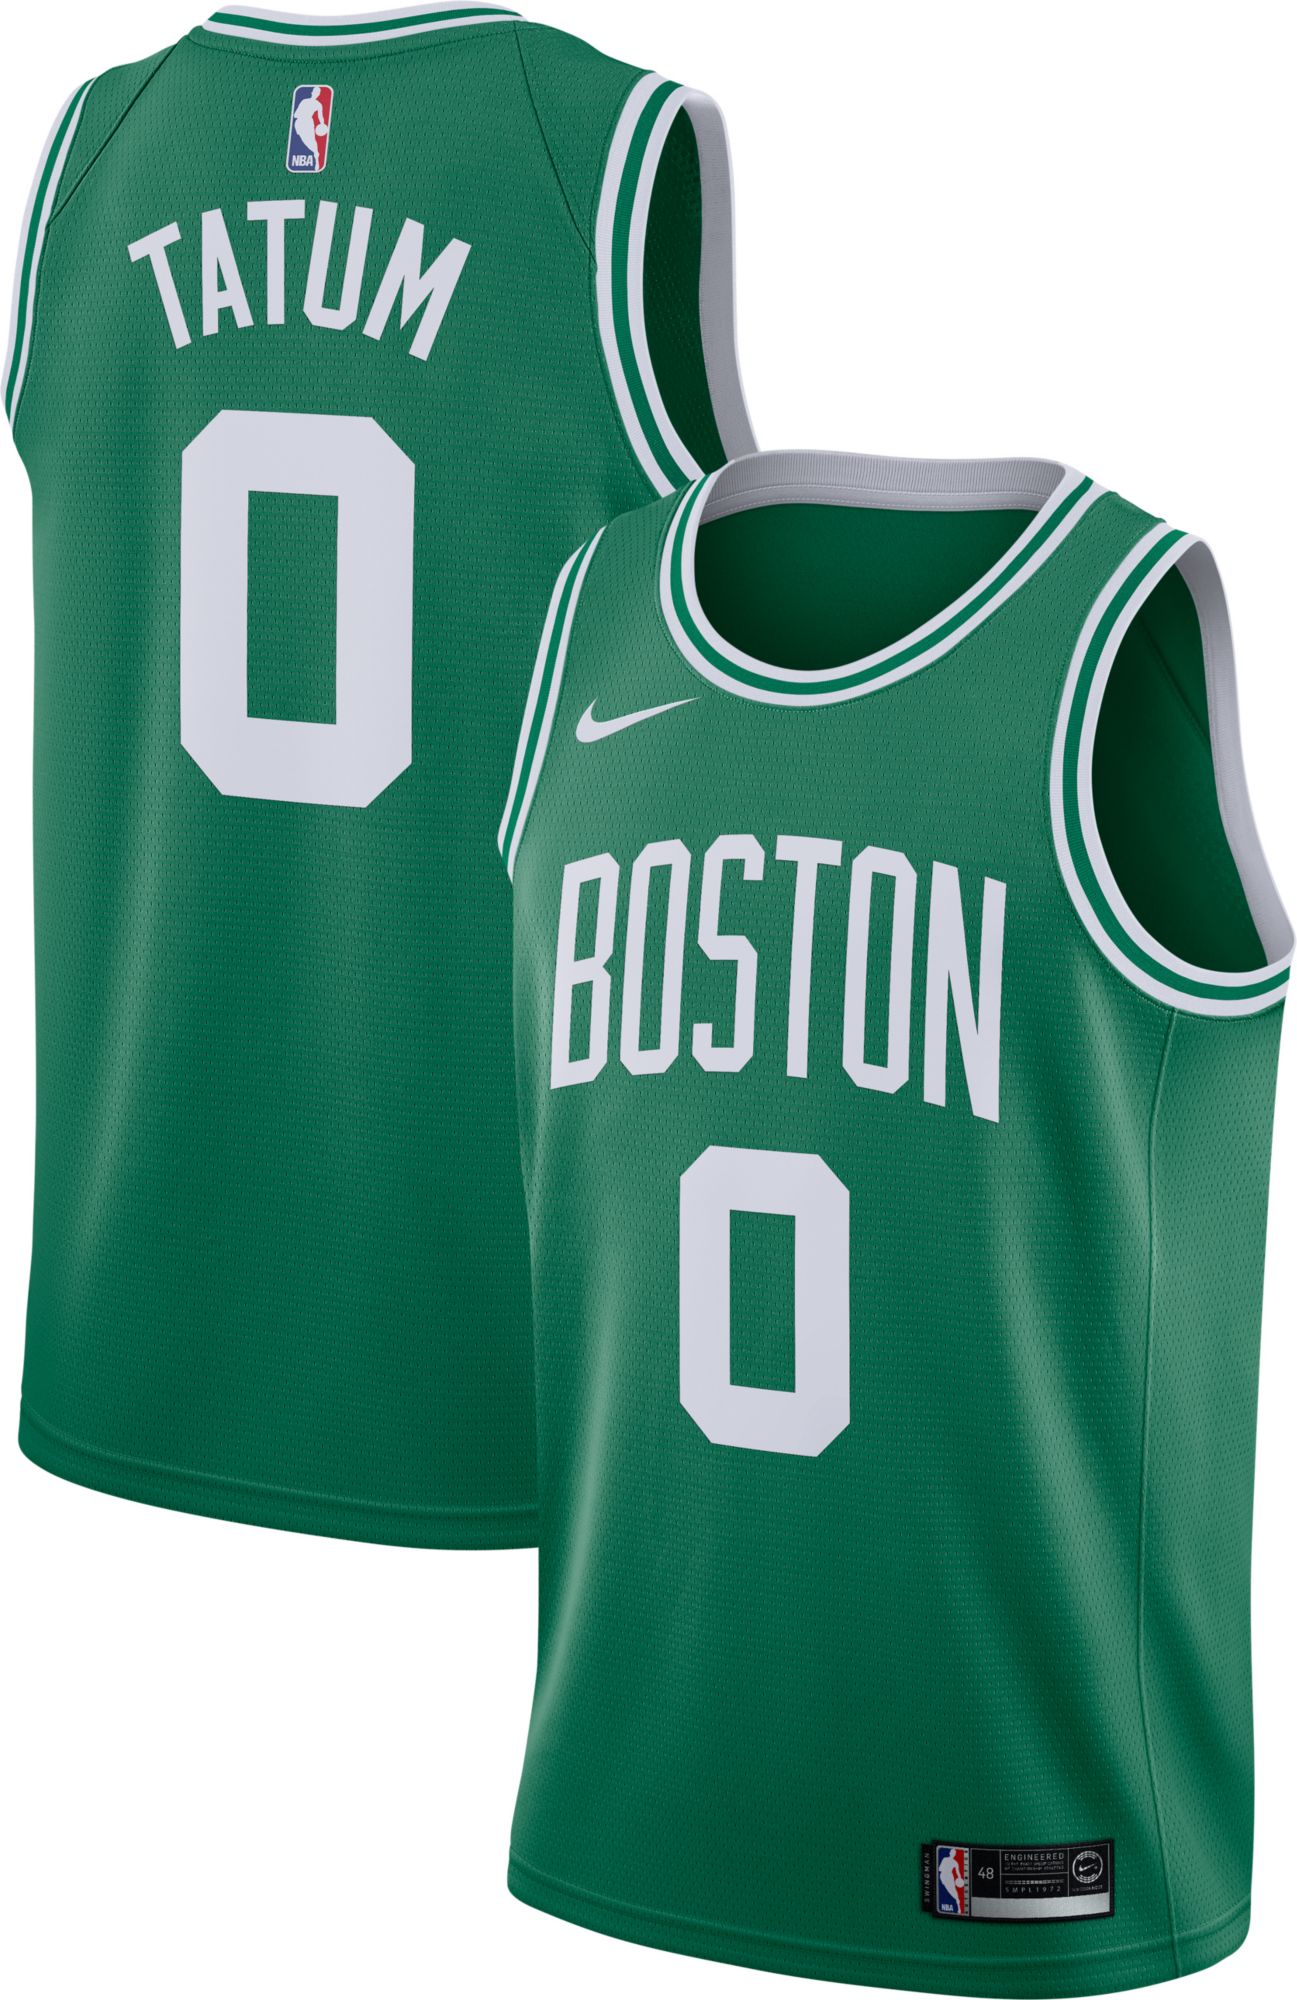 boston celtics jersey number 7